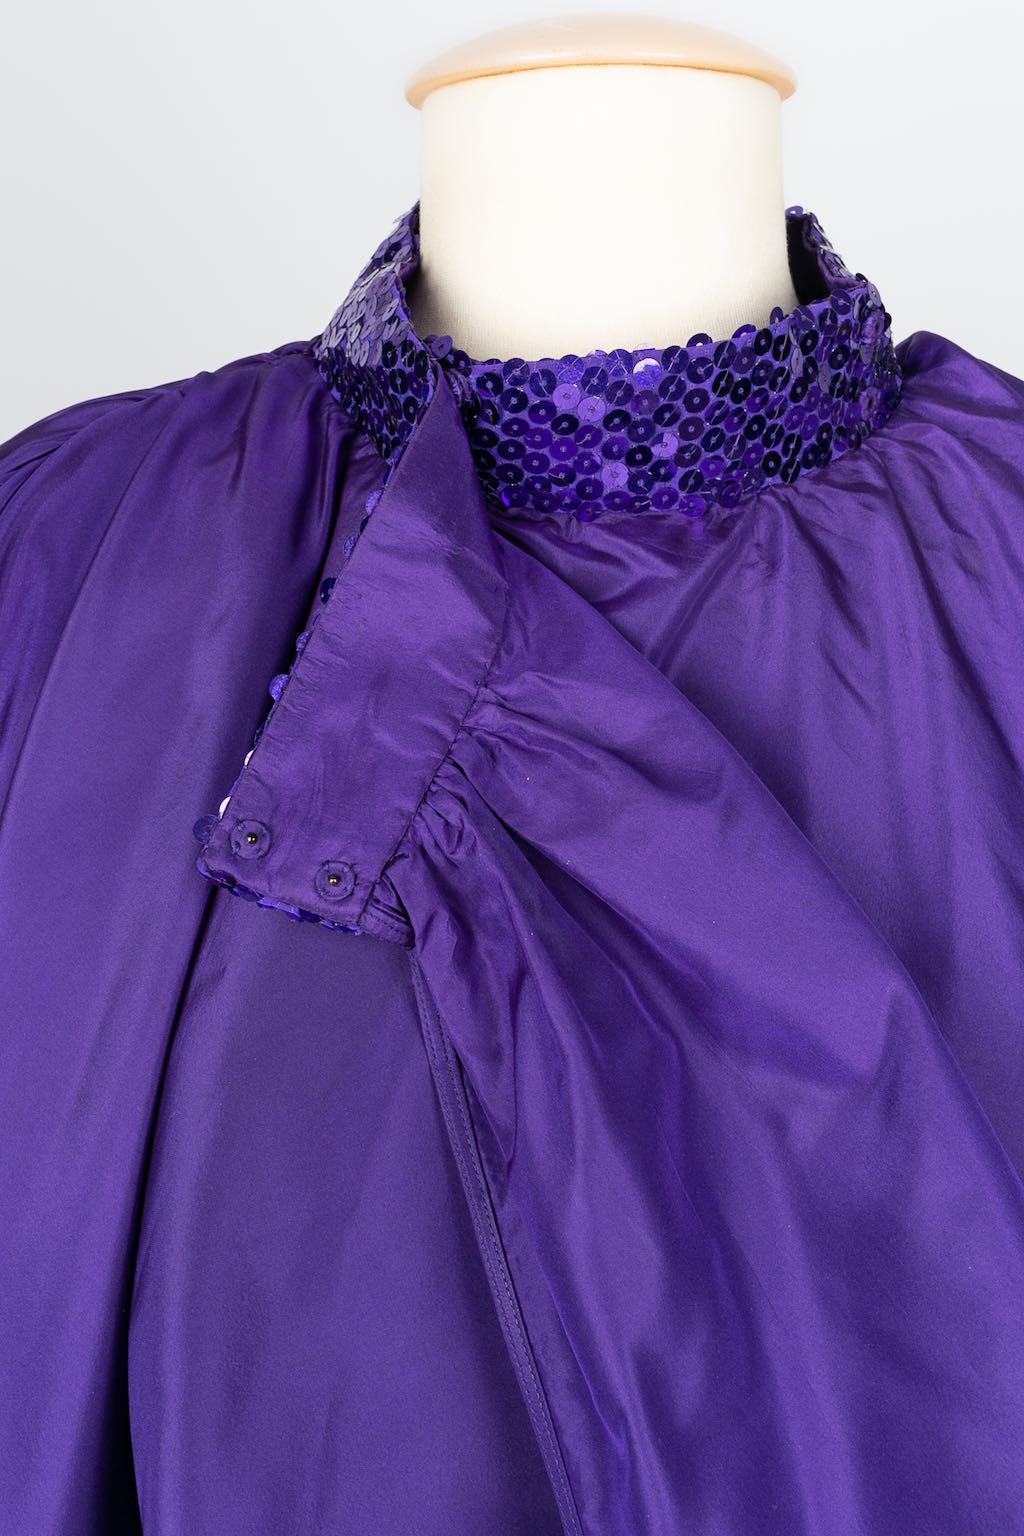 Azzaro Evening Taffeta Cape Embroidered Dress, Size 40FR 10